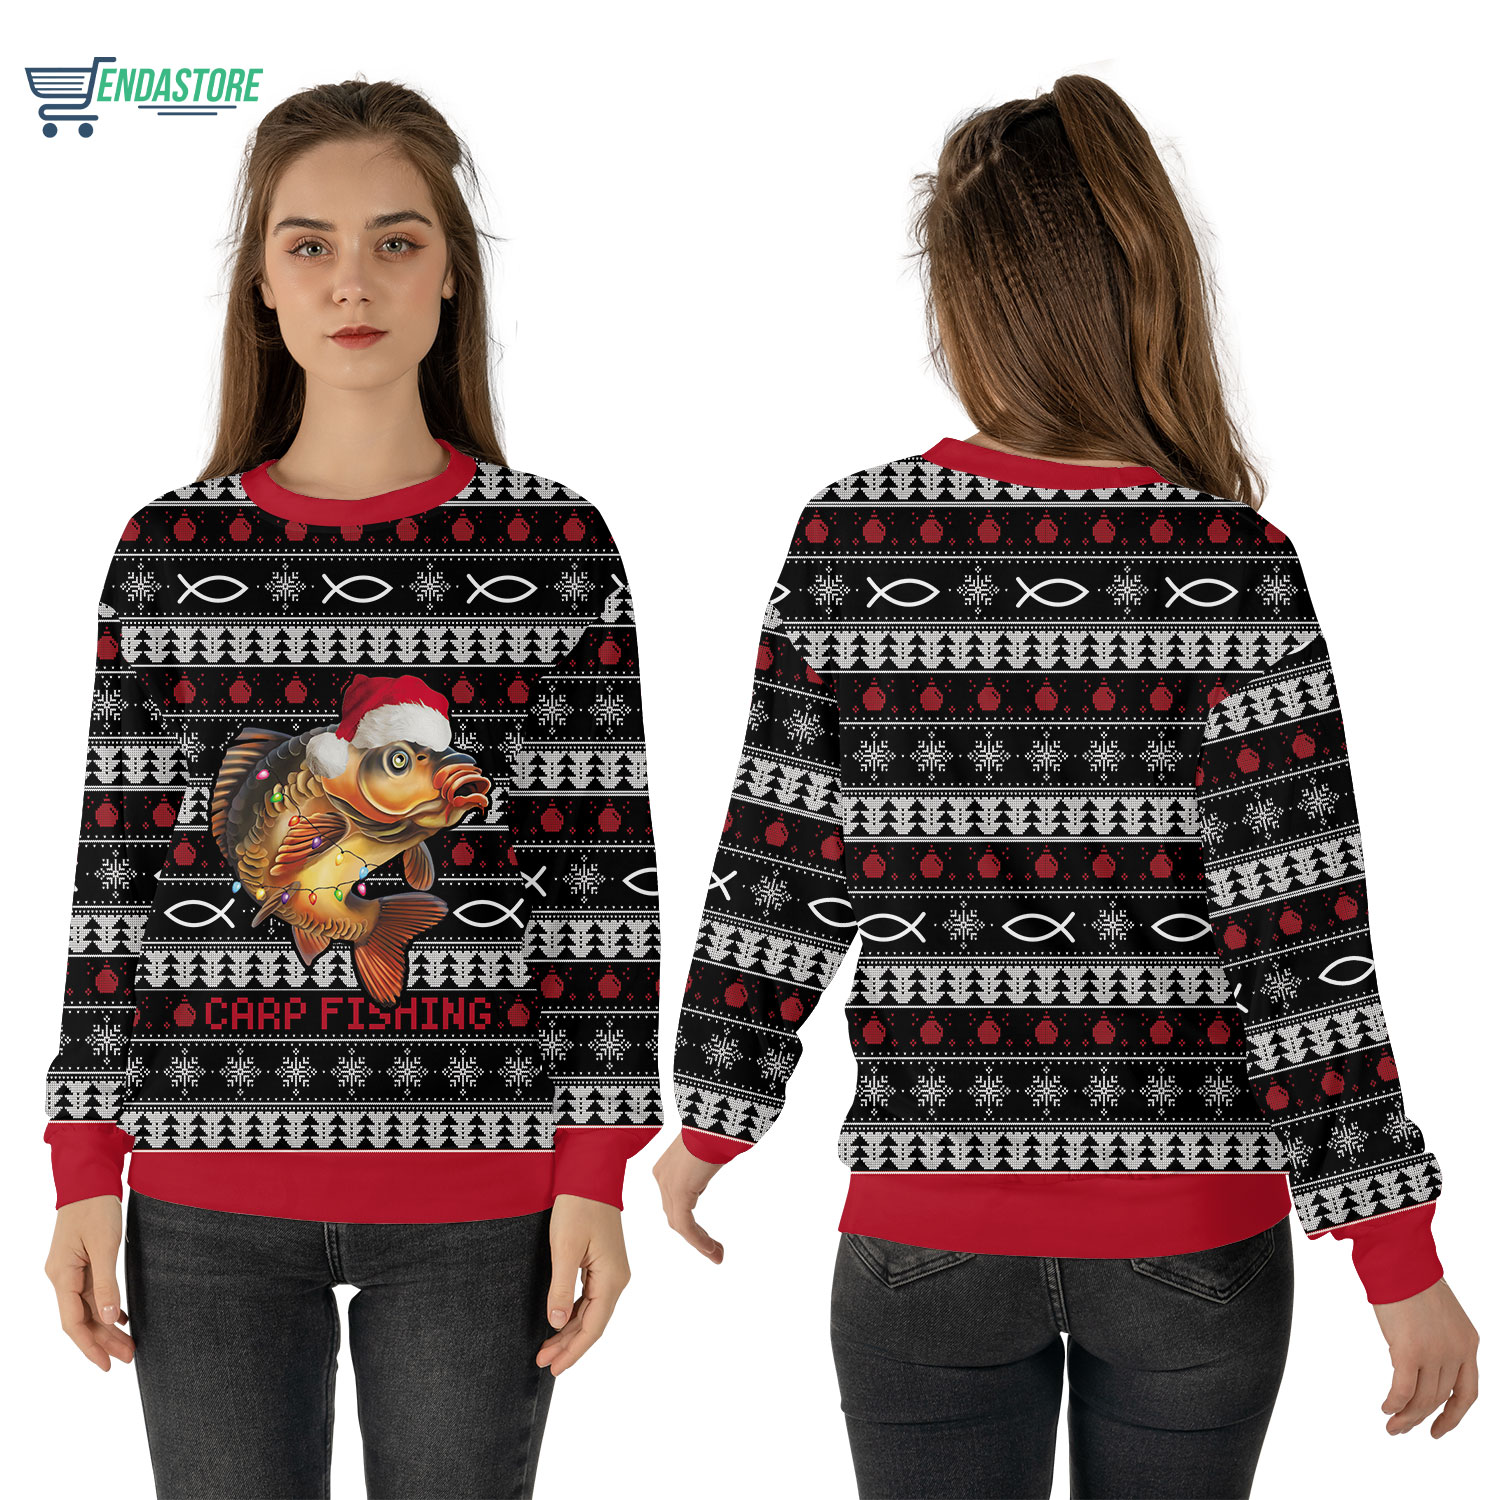 Carp fishing Christmas sweater 